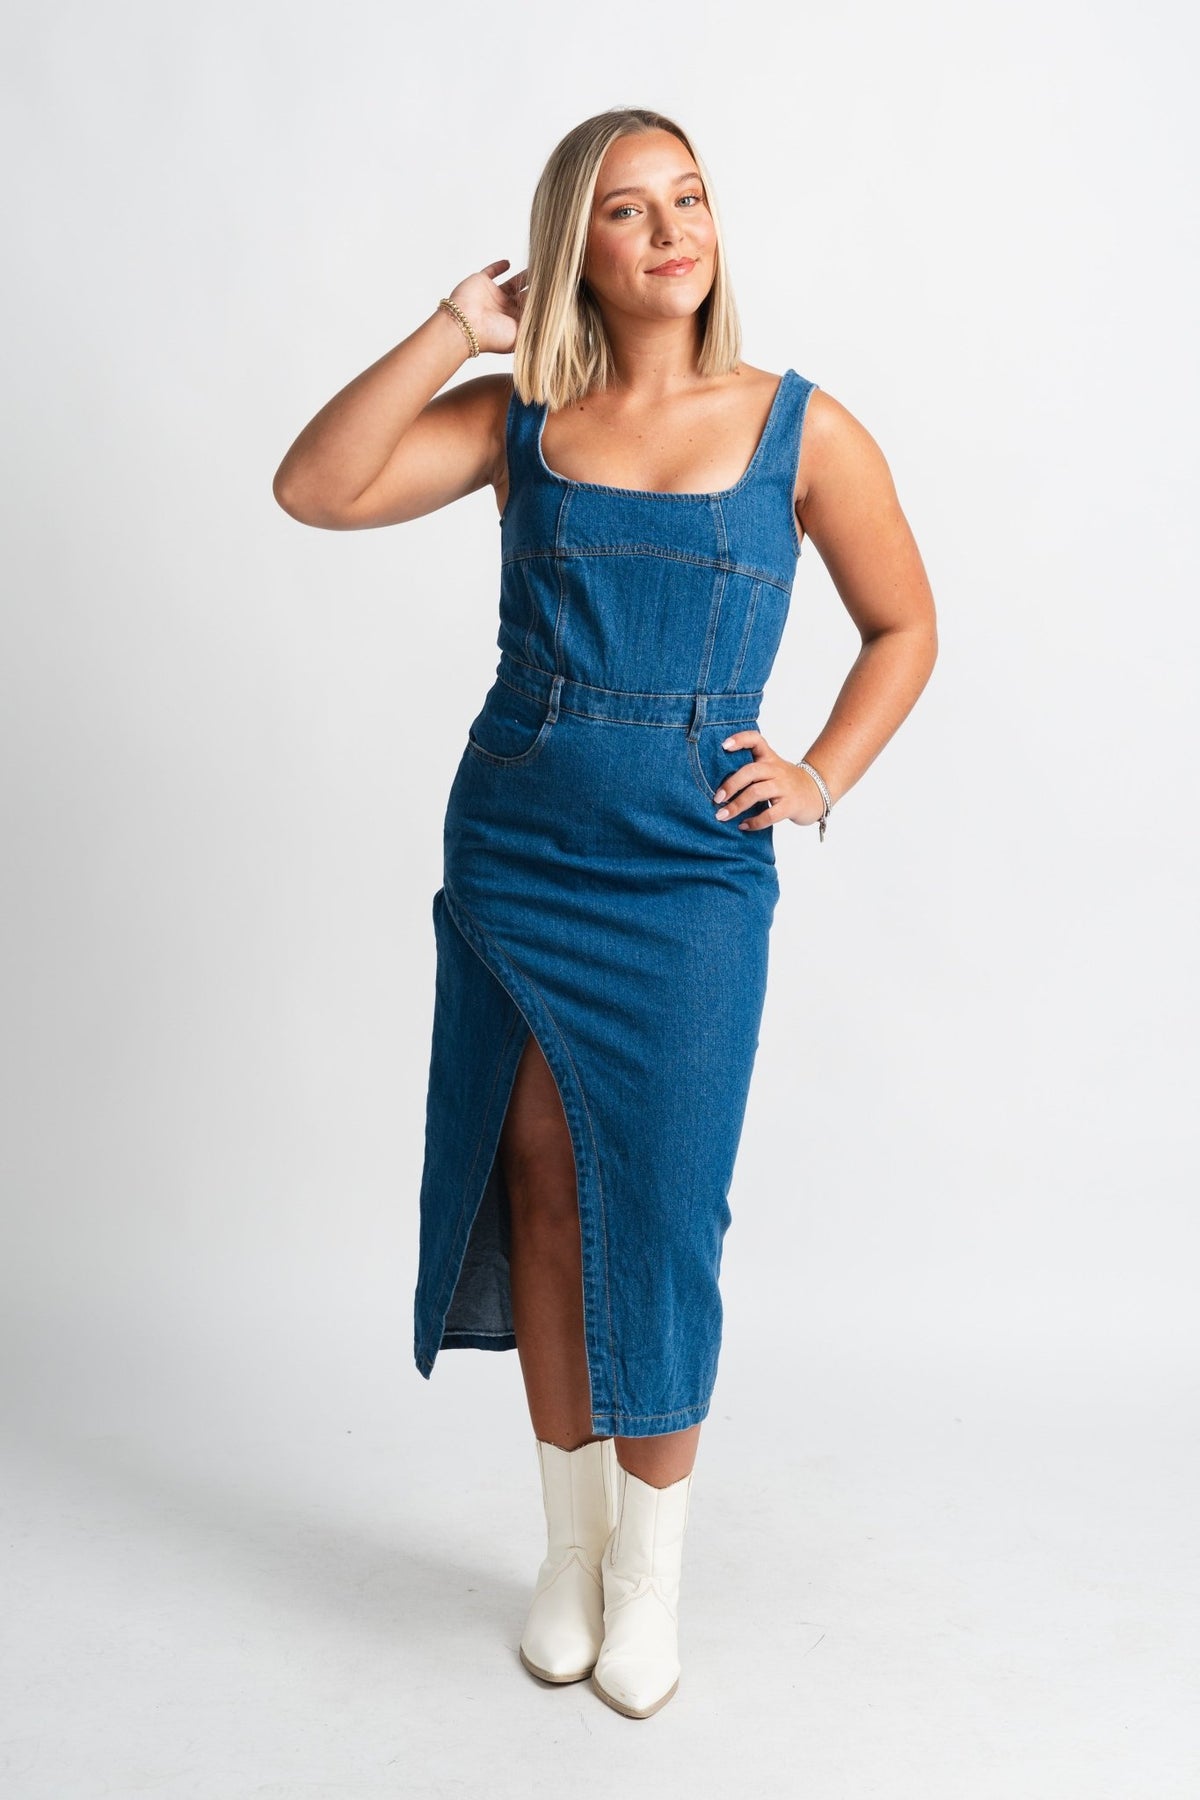 Denim midi dress blue - Cute dress - Trendy Dresses at Lush Fashion Lounge Boutique in Oklahoma City